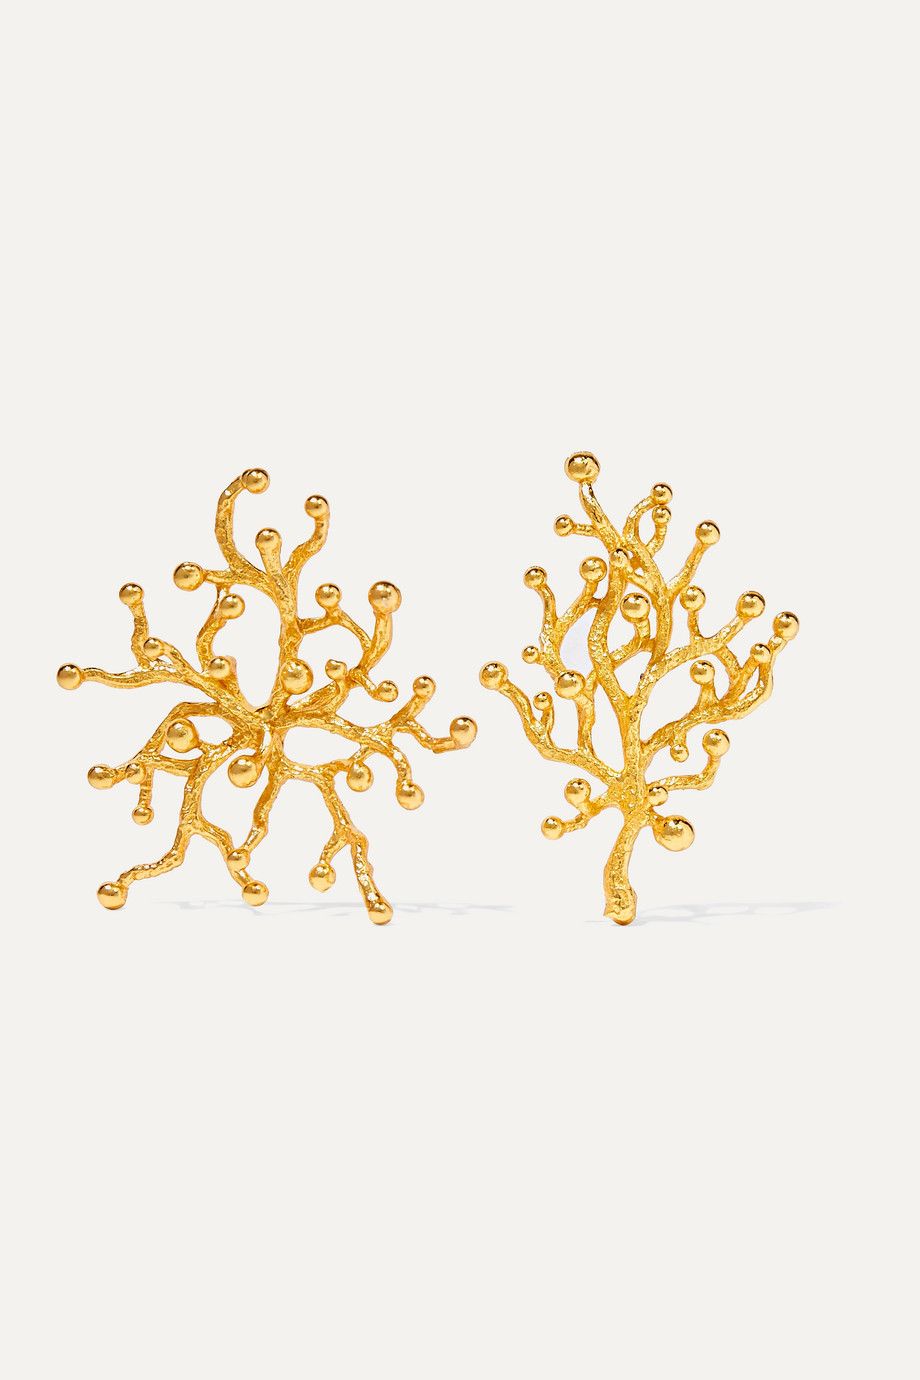 Minimalist Tree of Life Earrings + Screw Back Post – The Jewel Parlor